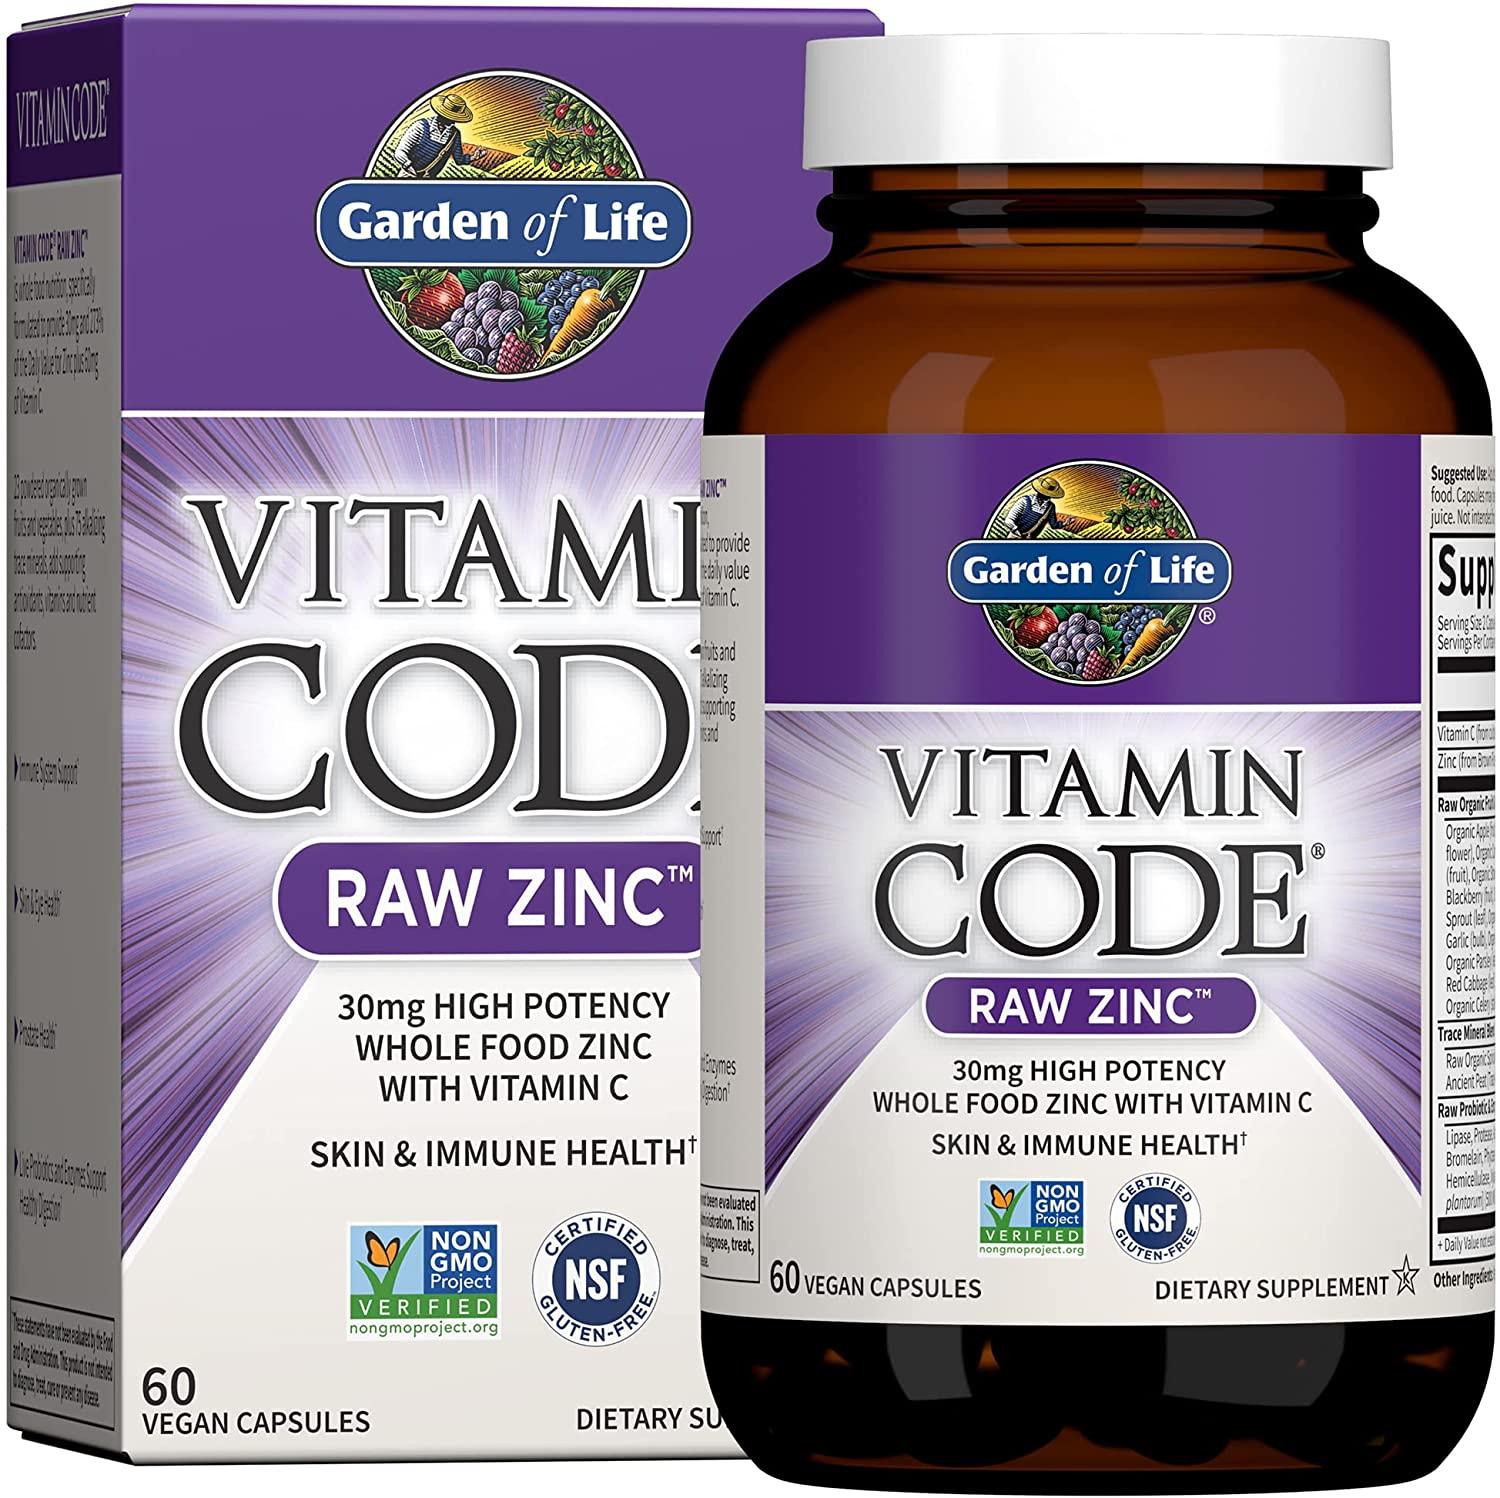 Garden of Life Vitamin Code Raw Vegan Zinc Capsules for $7.98 Shipped